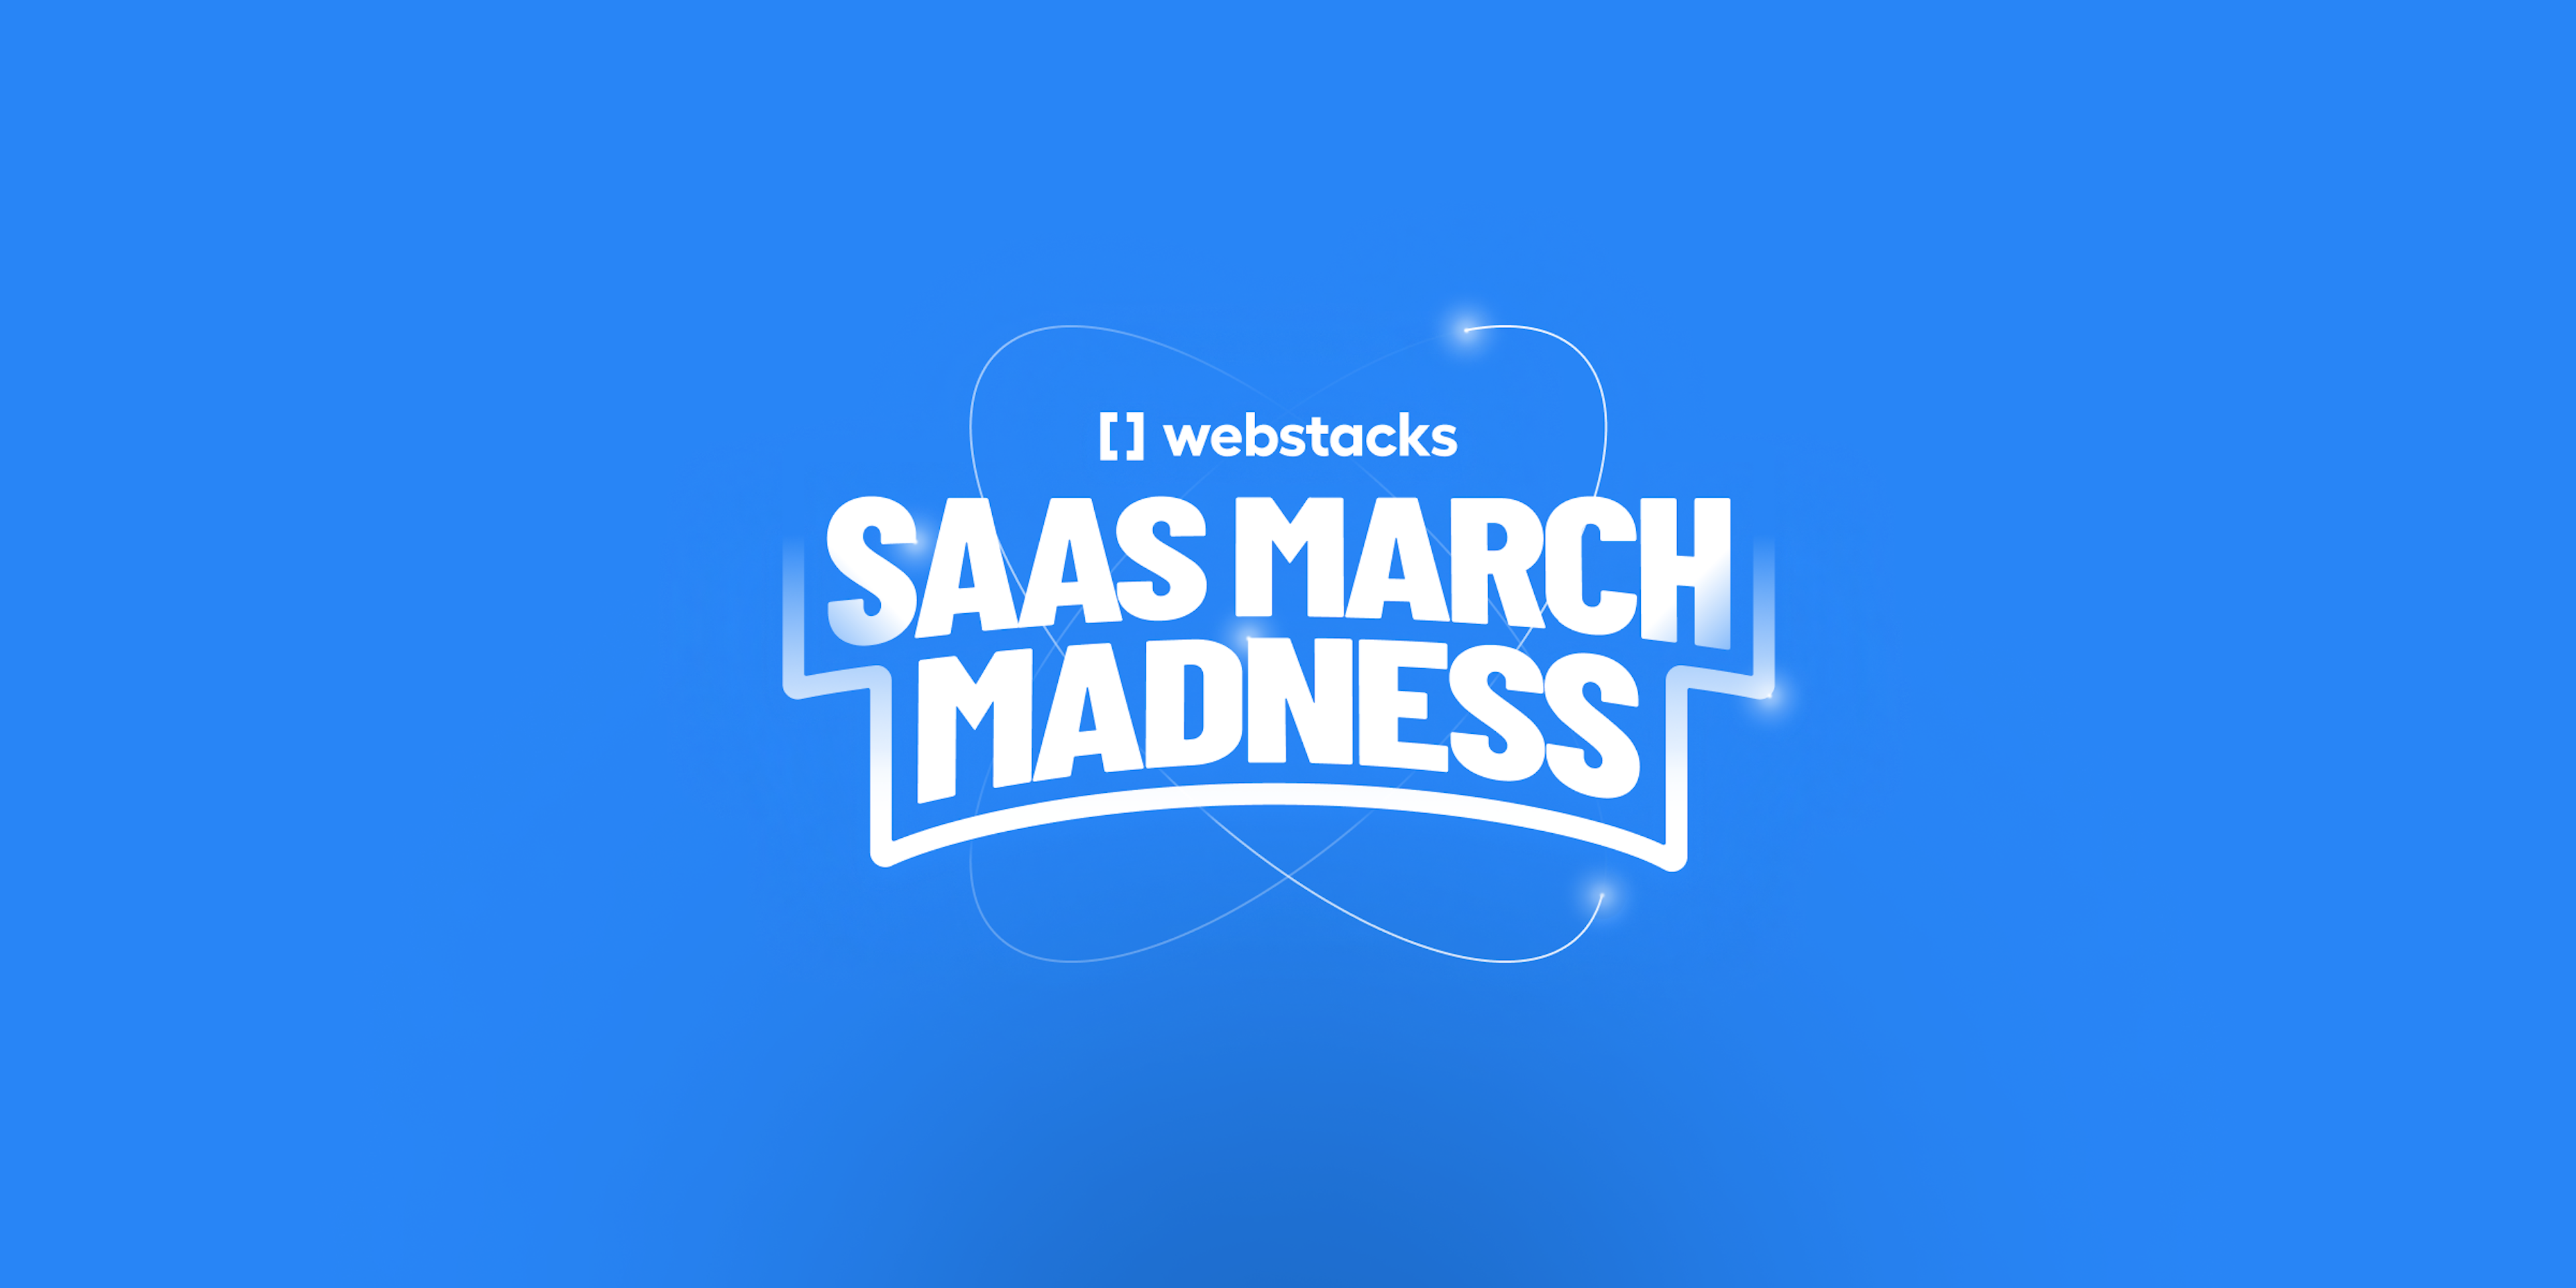 Webstacks SaaS March Madness logo